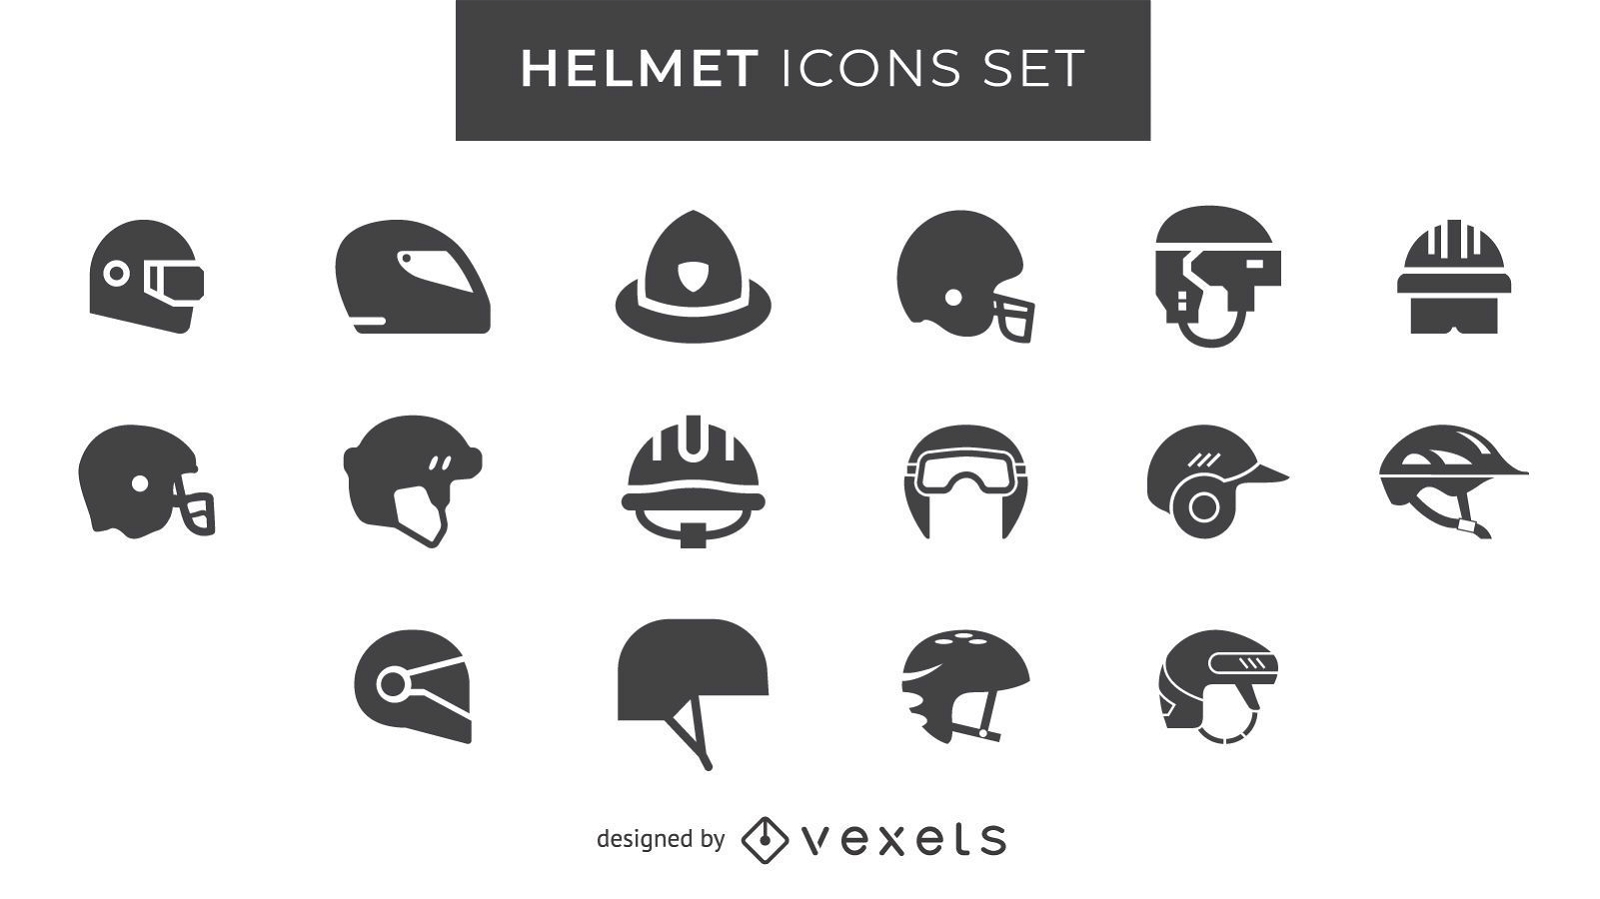 Helmet icons set